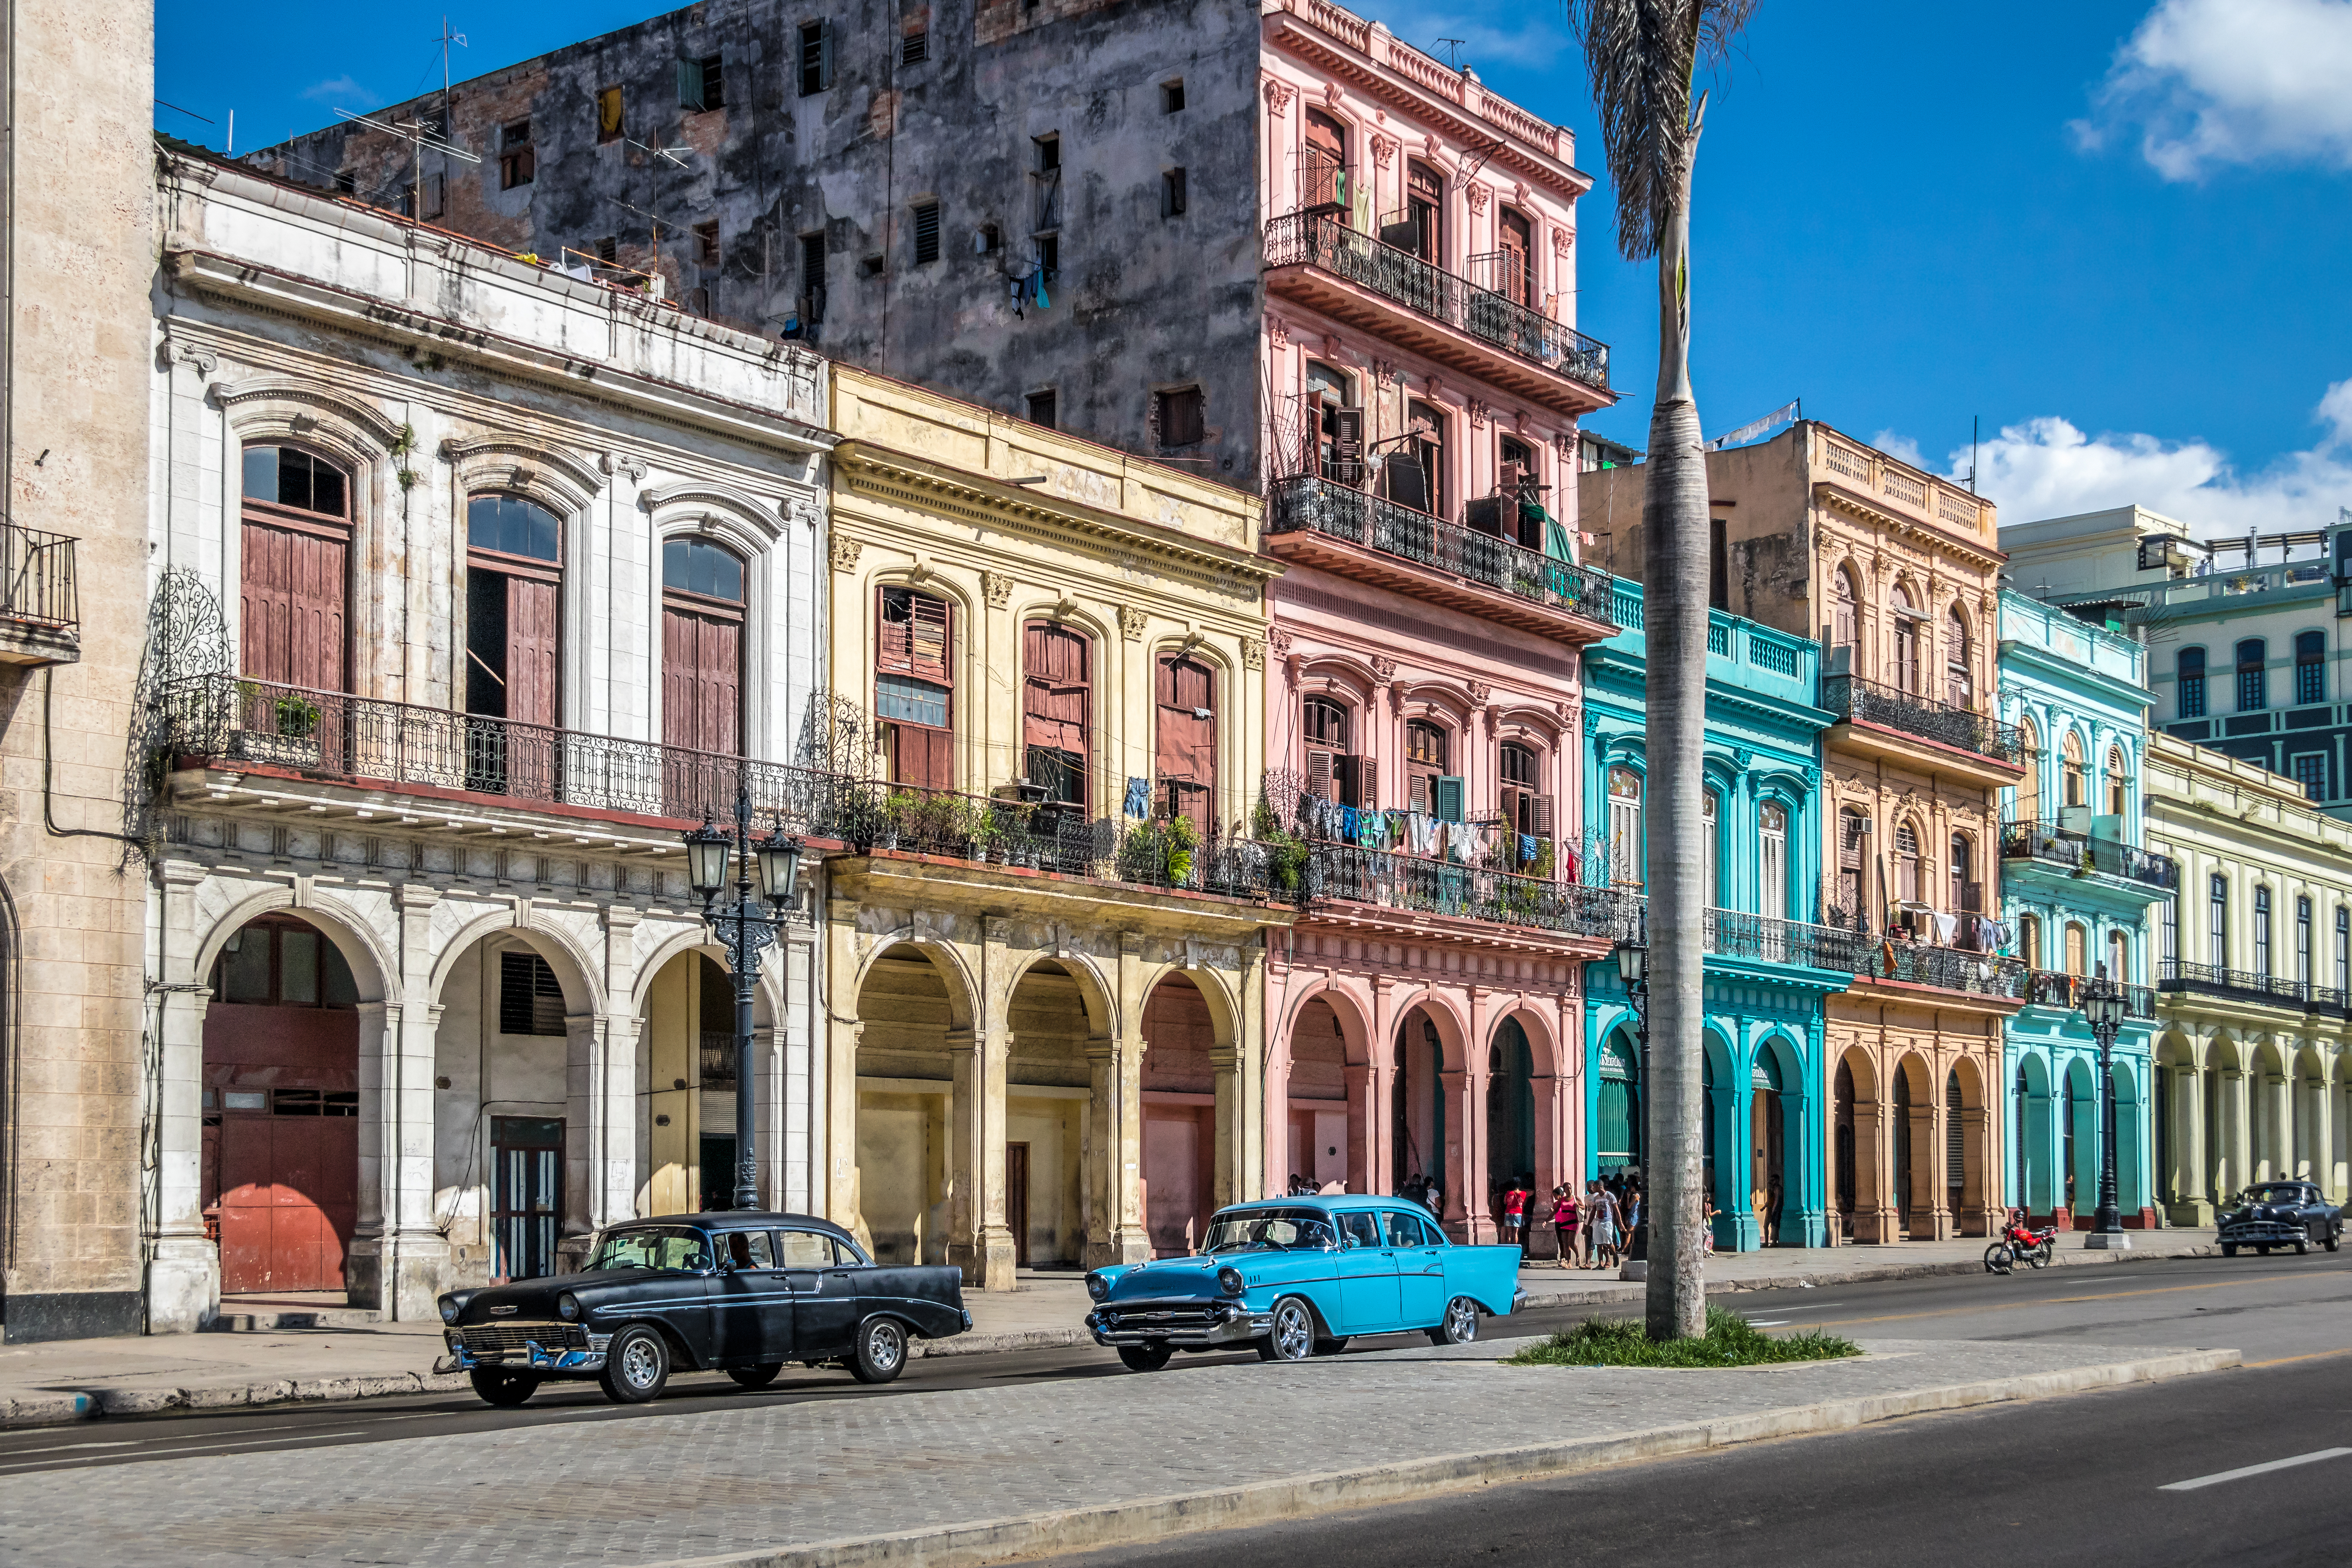     À Cuba, la pénurie de carburants s'aggrave

